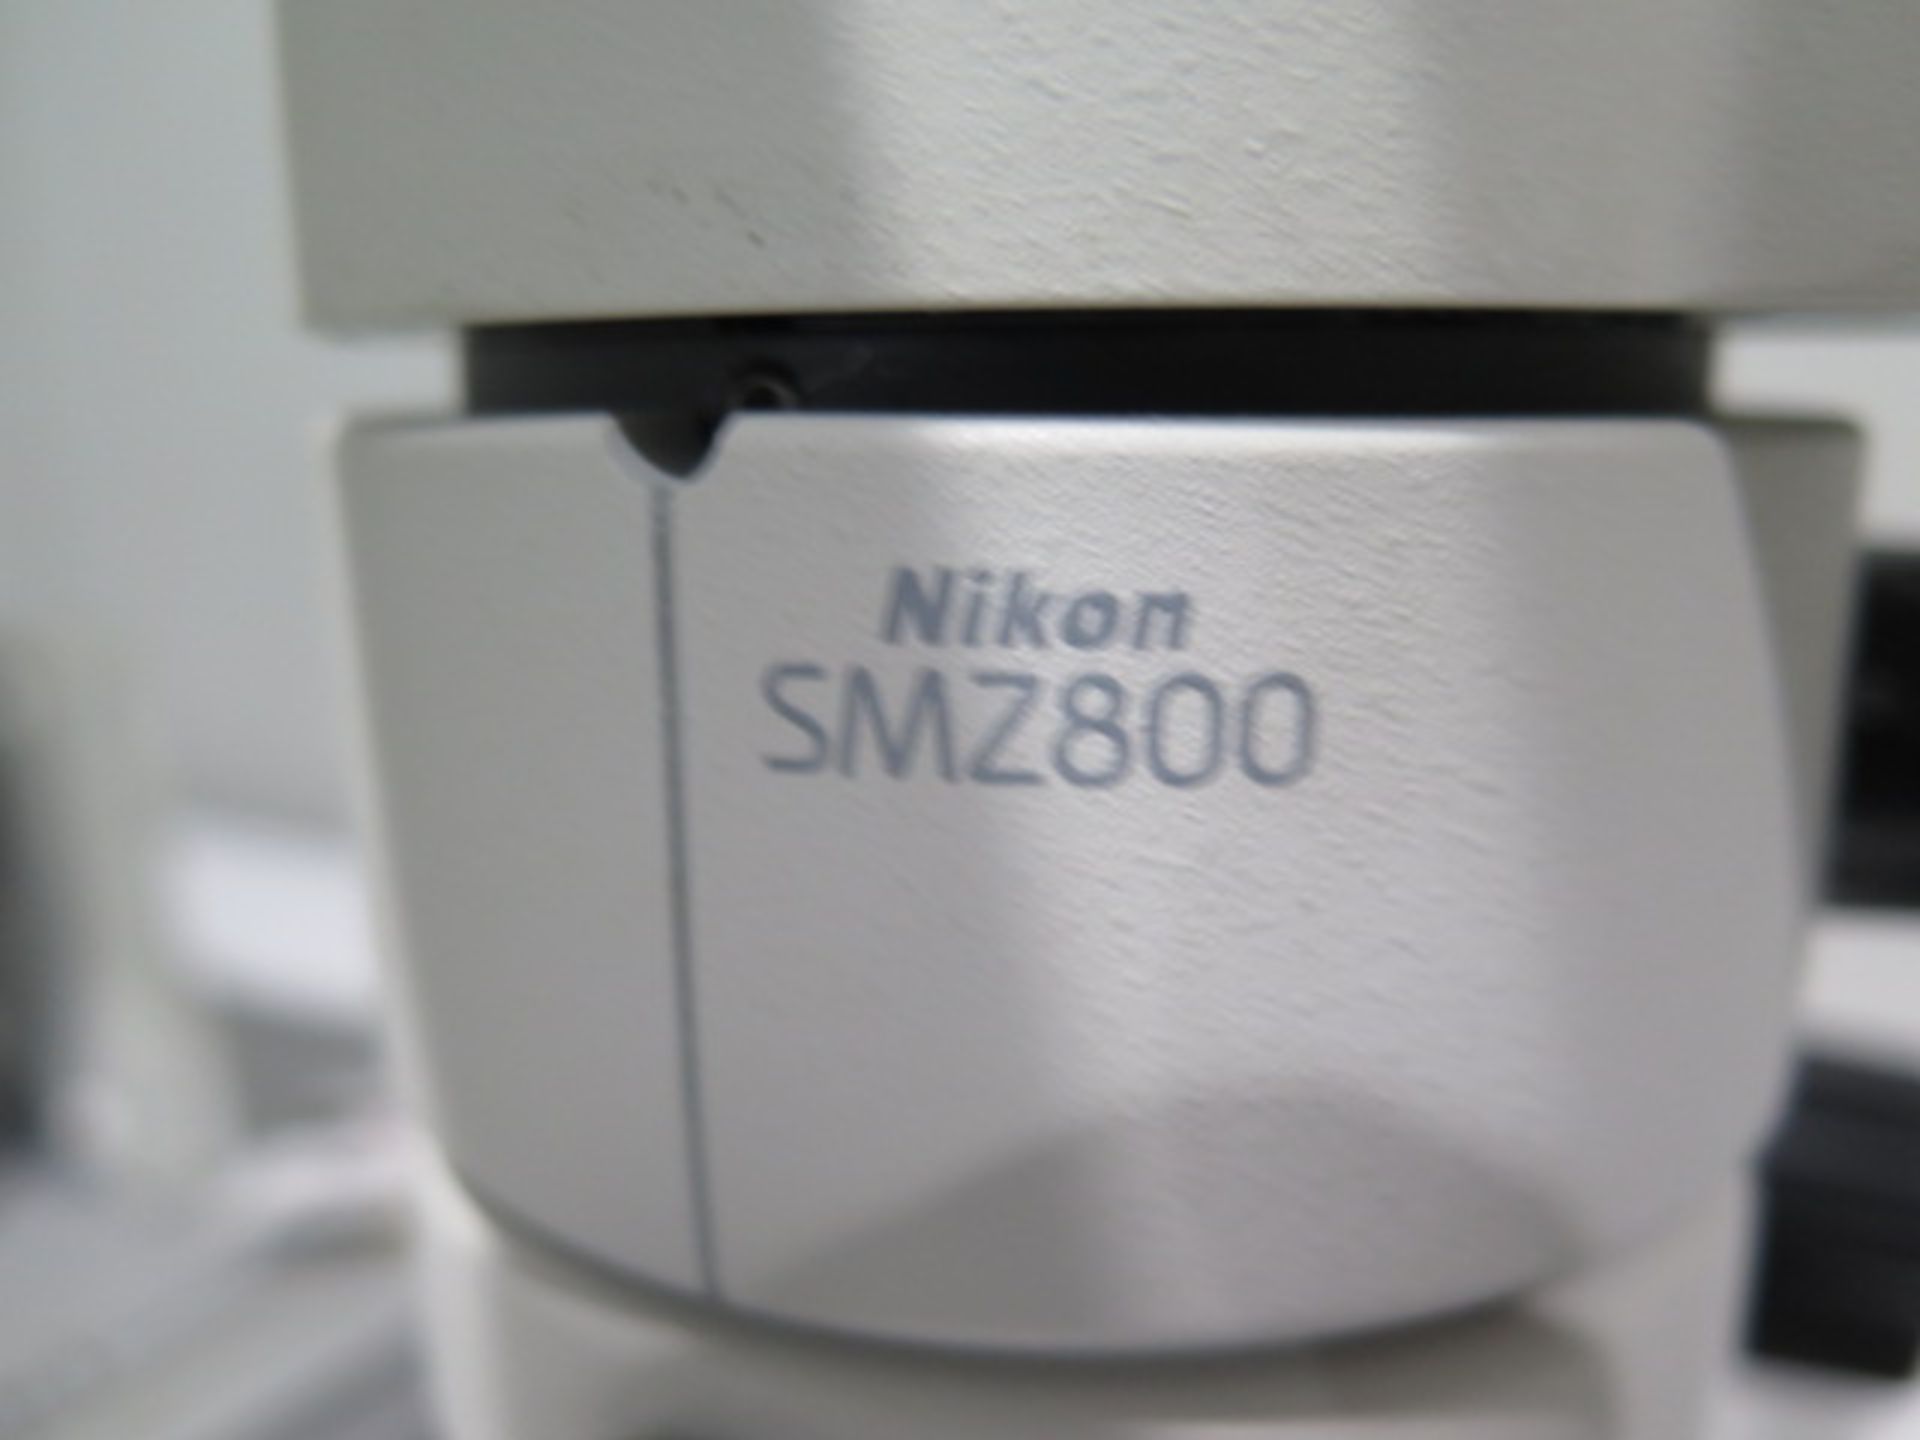 Nikon SMZ800 Monocular Microscope w/ Phototube Video Splitter Port (NO CAMERA), SOLD AS IS - Image 10 of 10